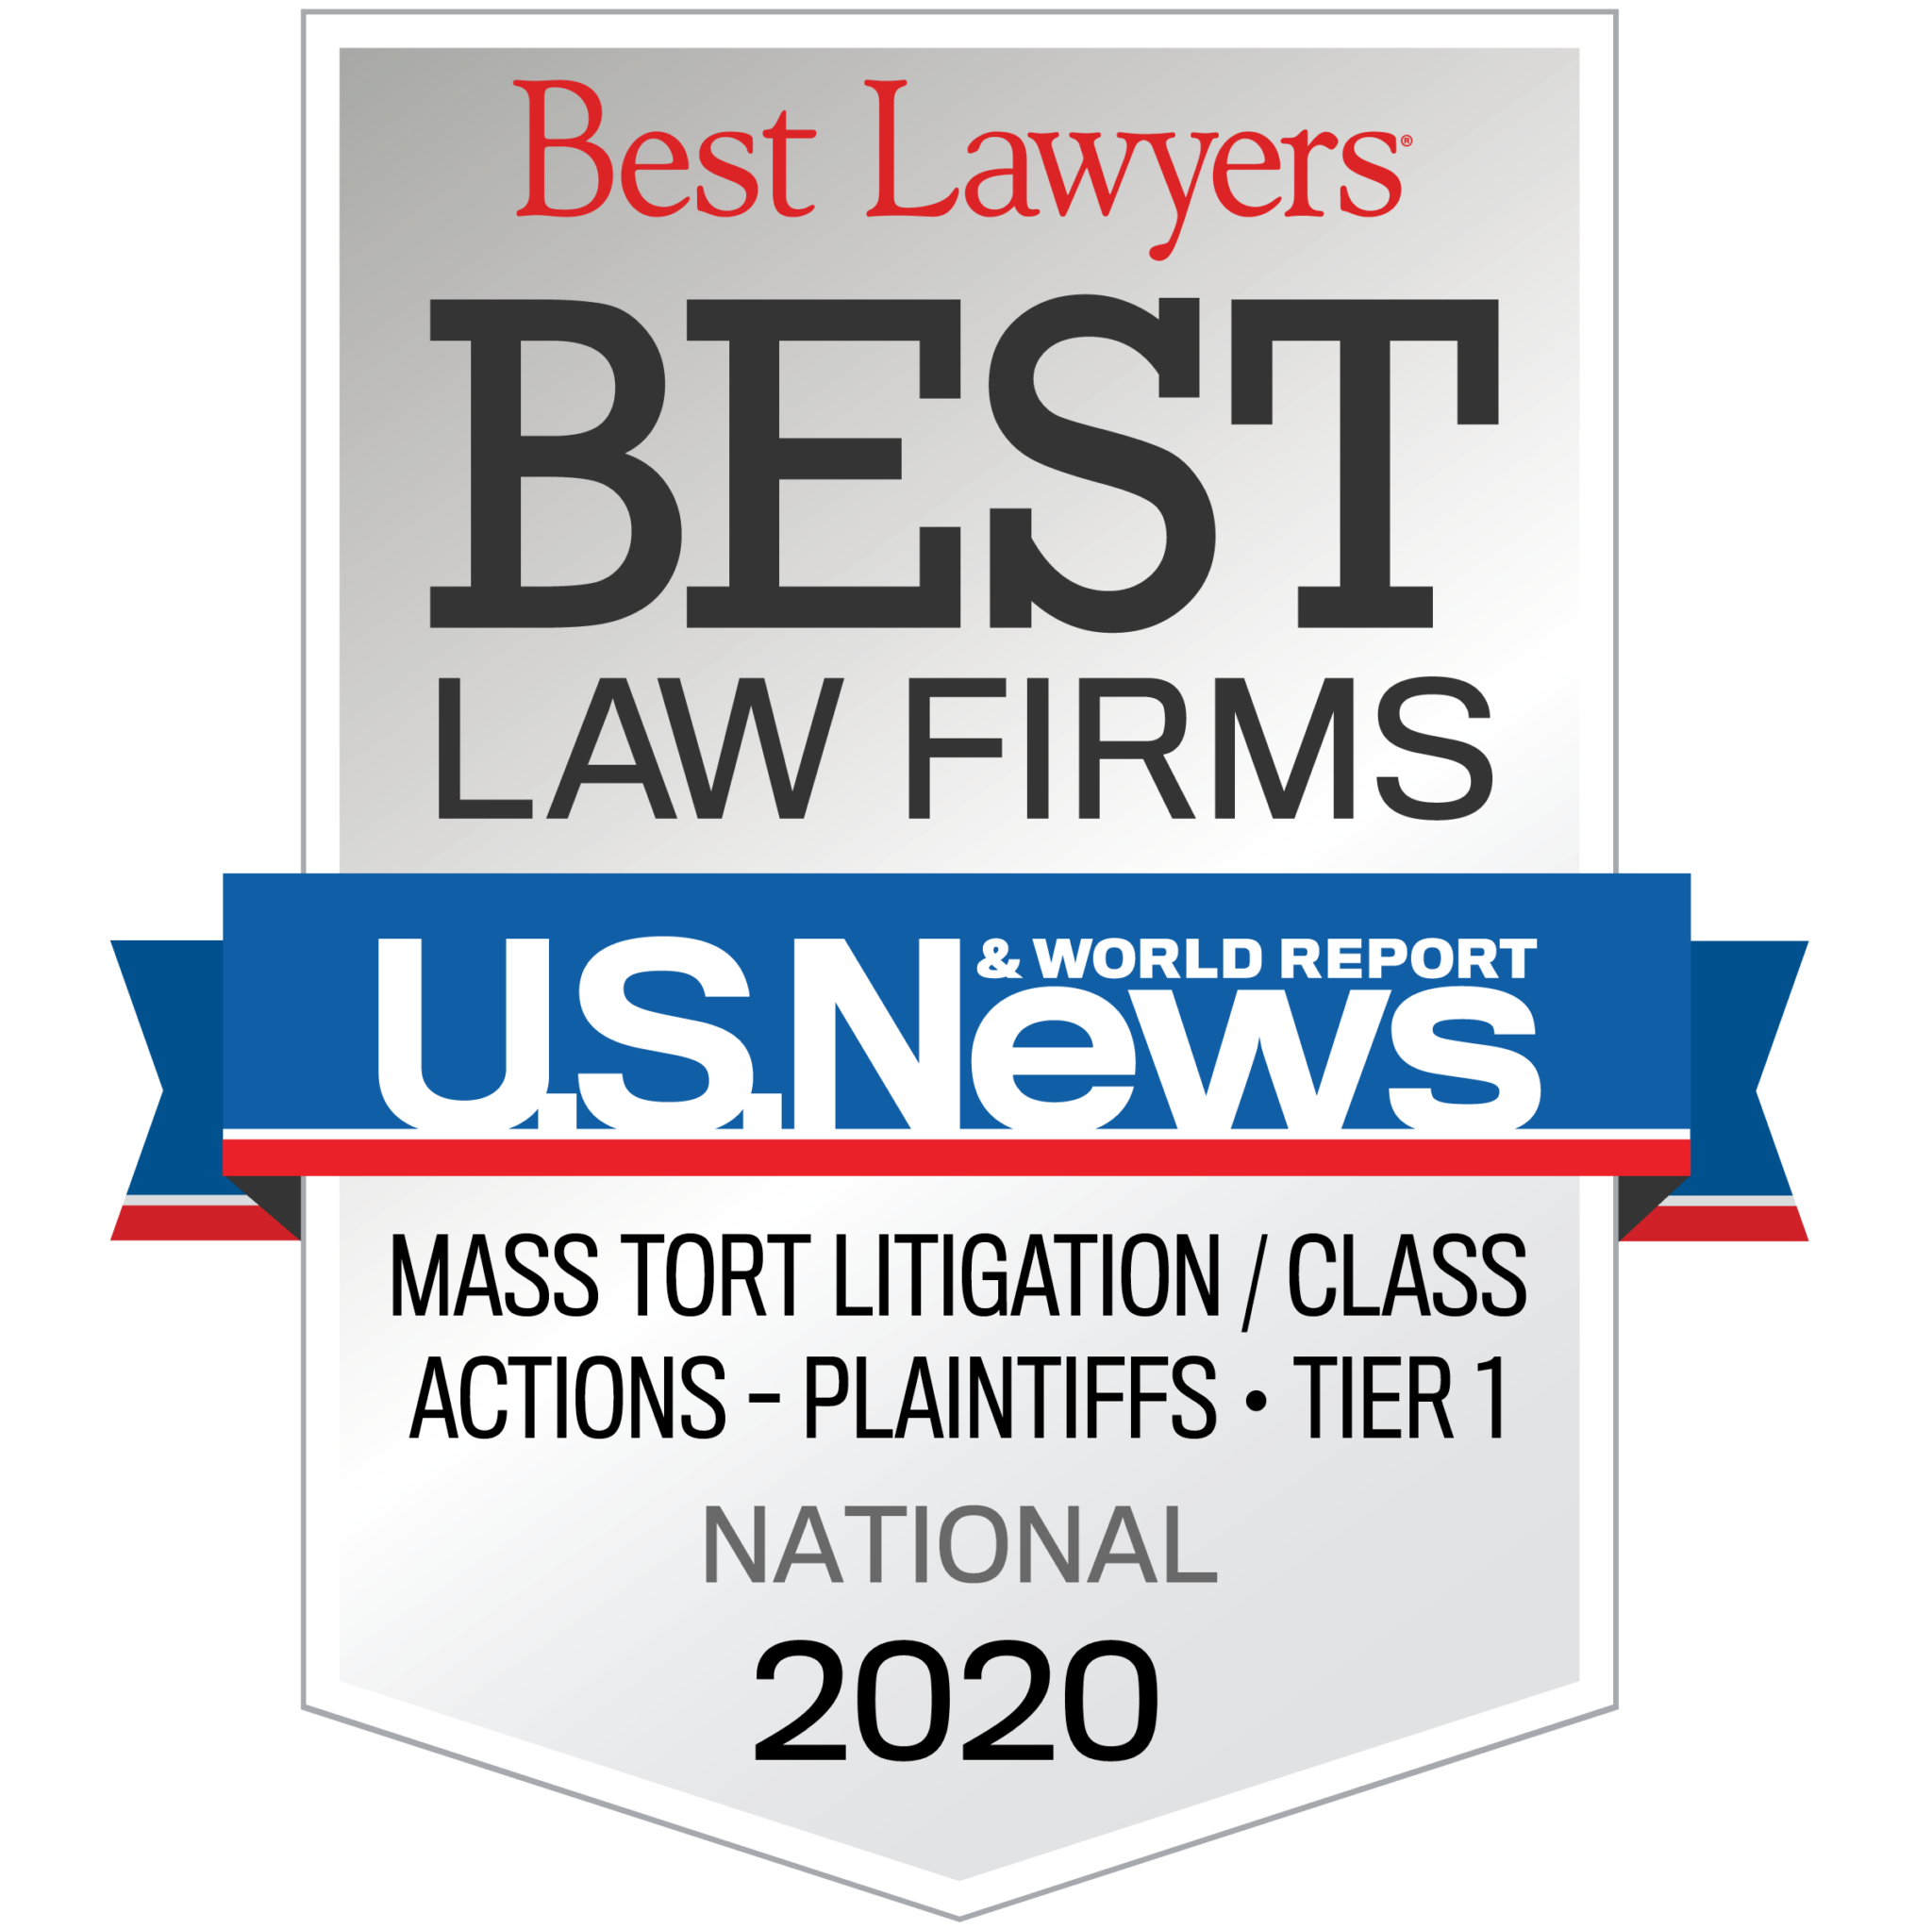 Best Lawyers - Best Law Firms - U.S. News 2020